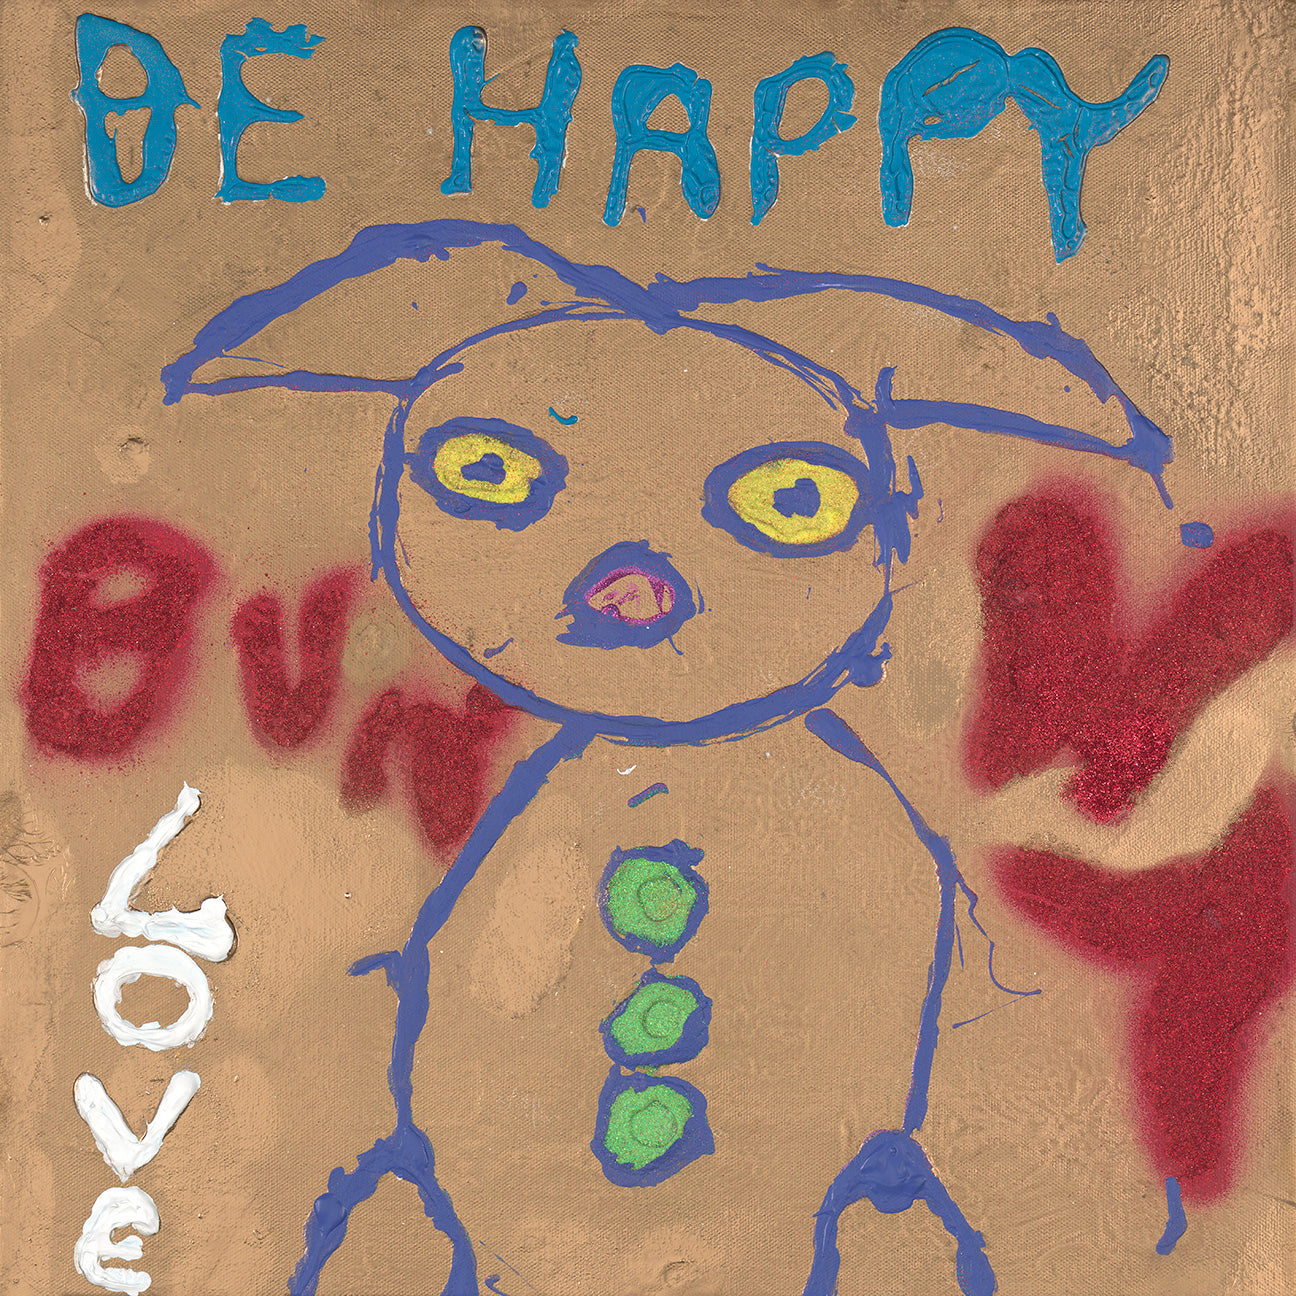 be-happy-bunny-original-painting